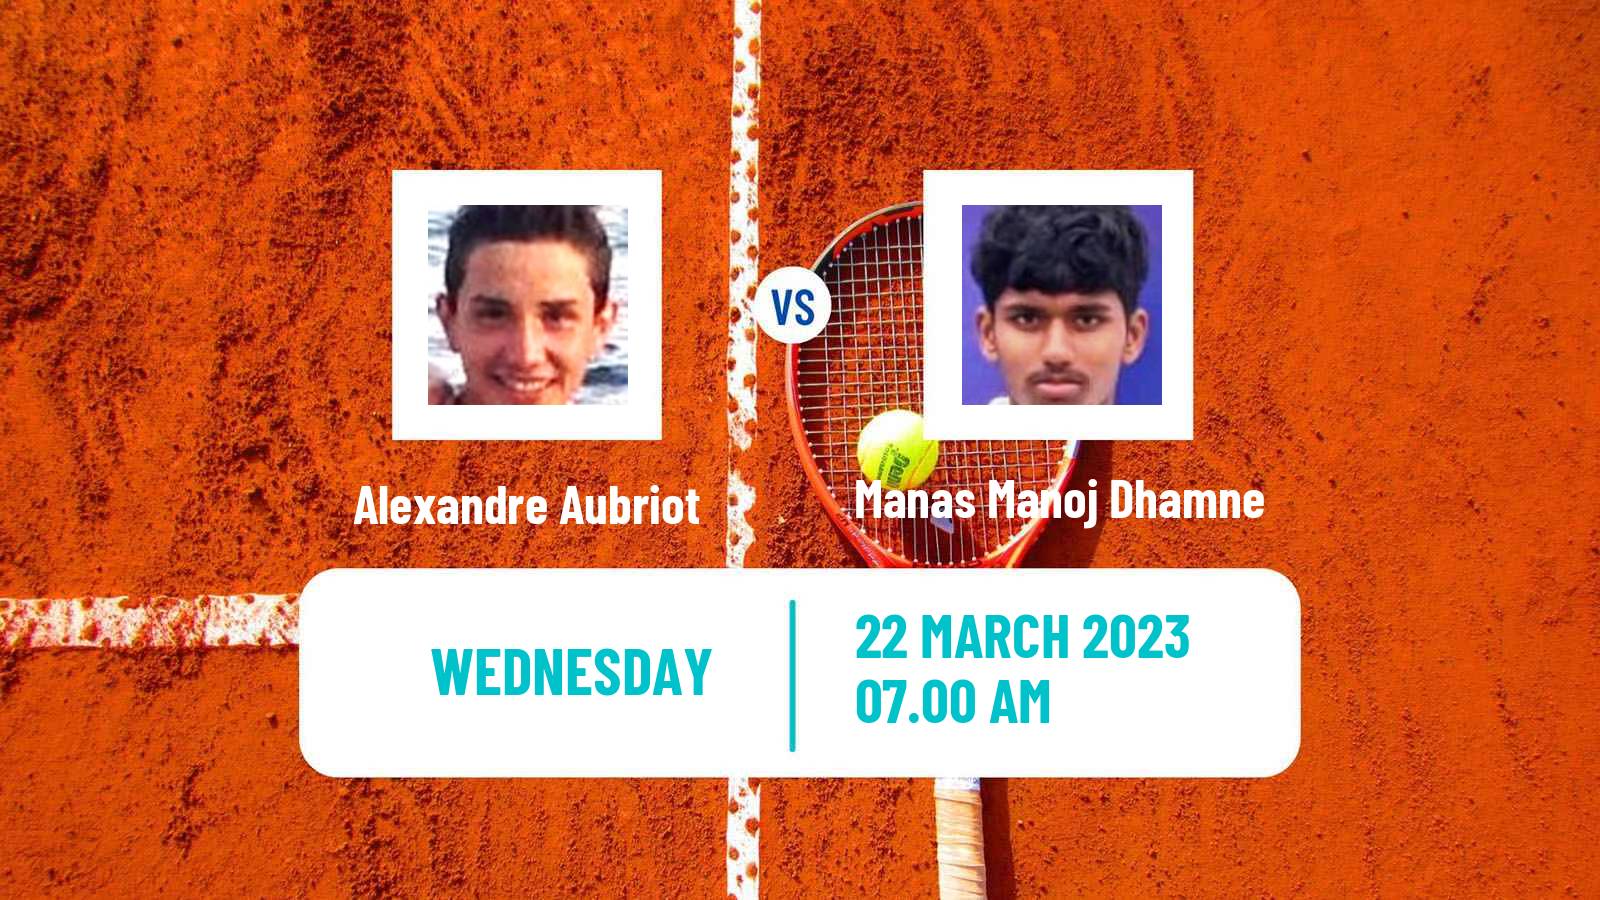 Tennis ITF Tournaments Alexandre Aubriot - Manas Manoj Dhamne